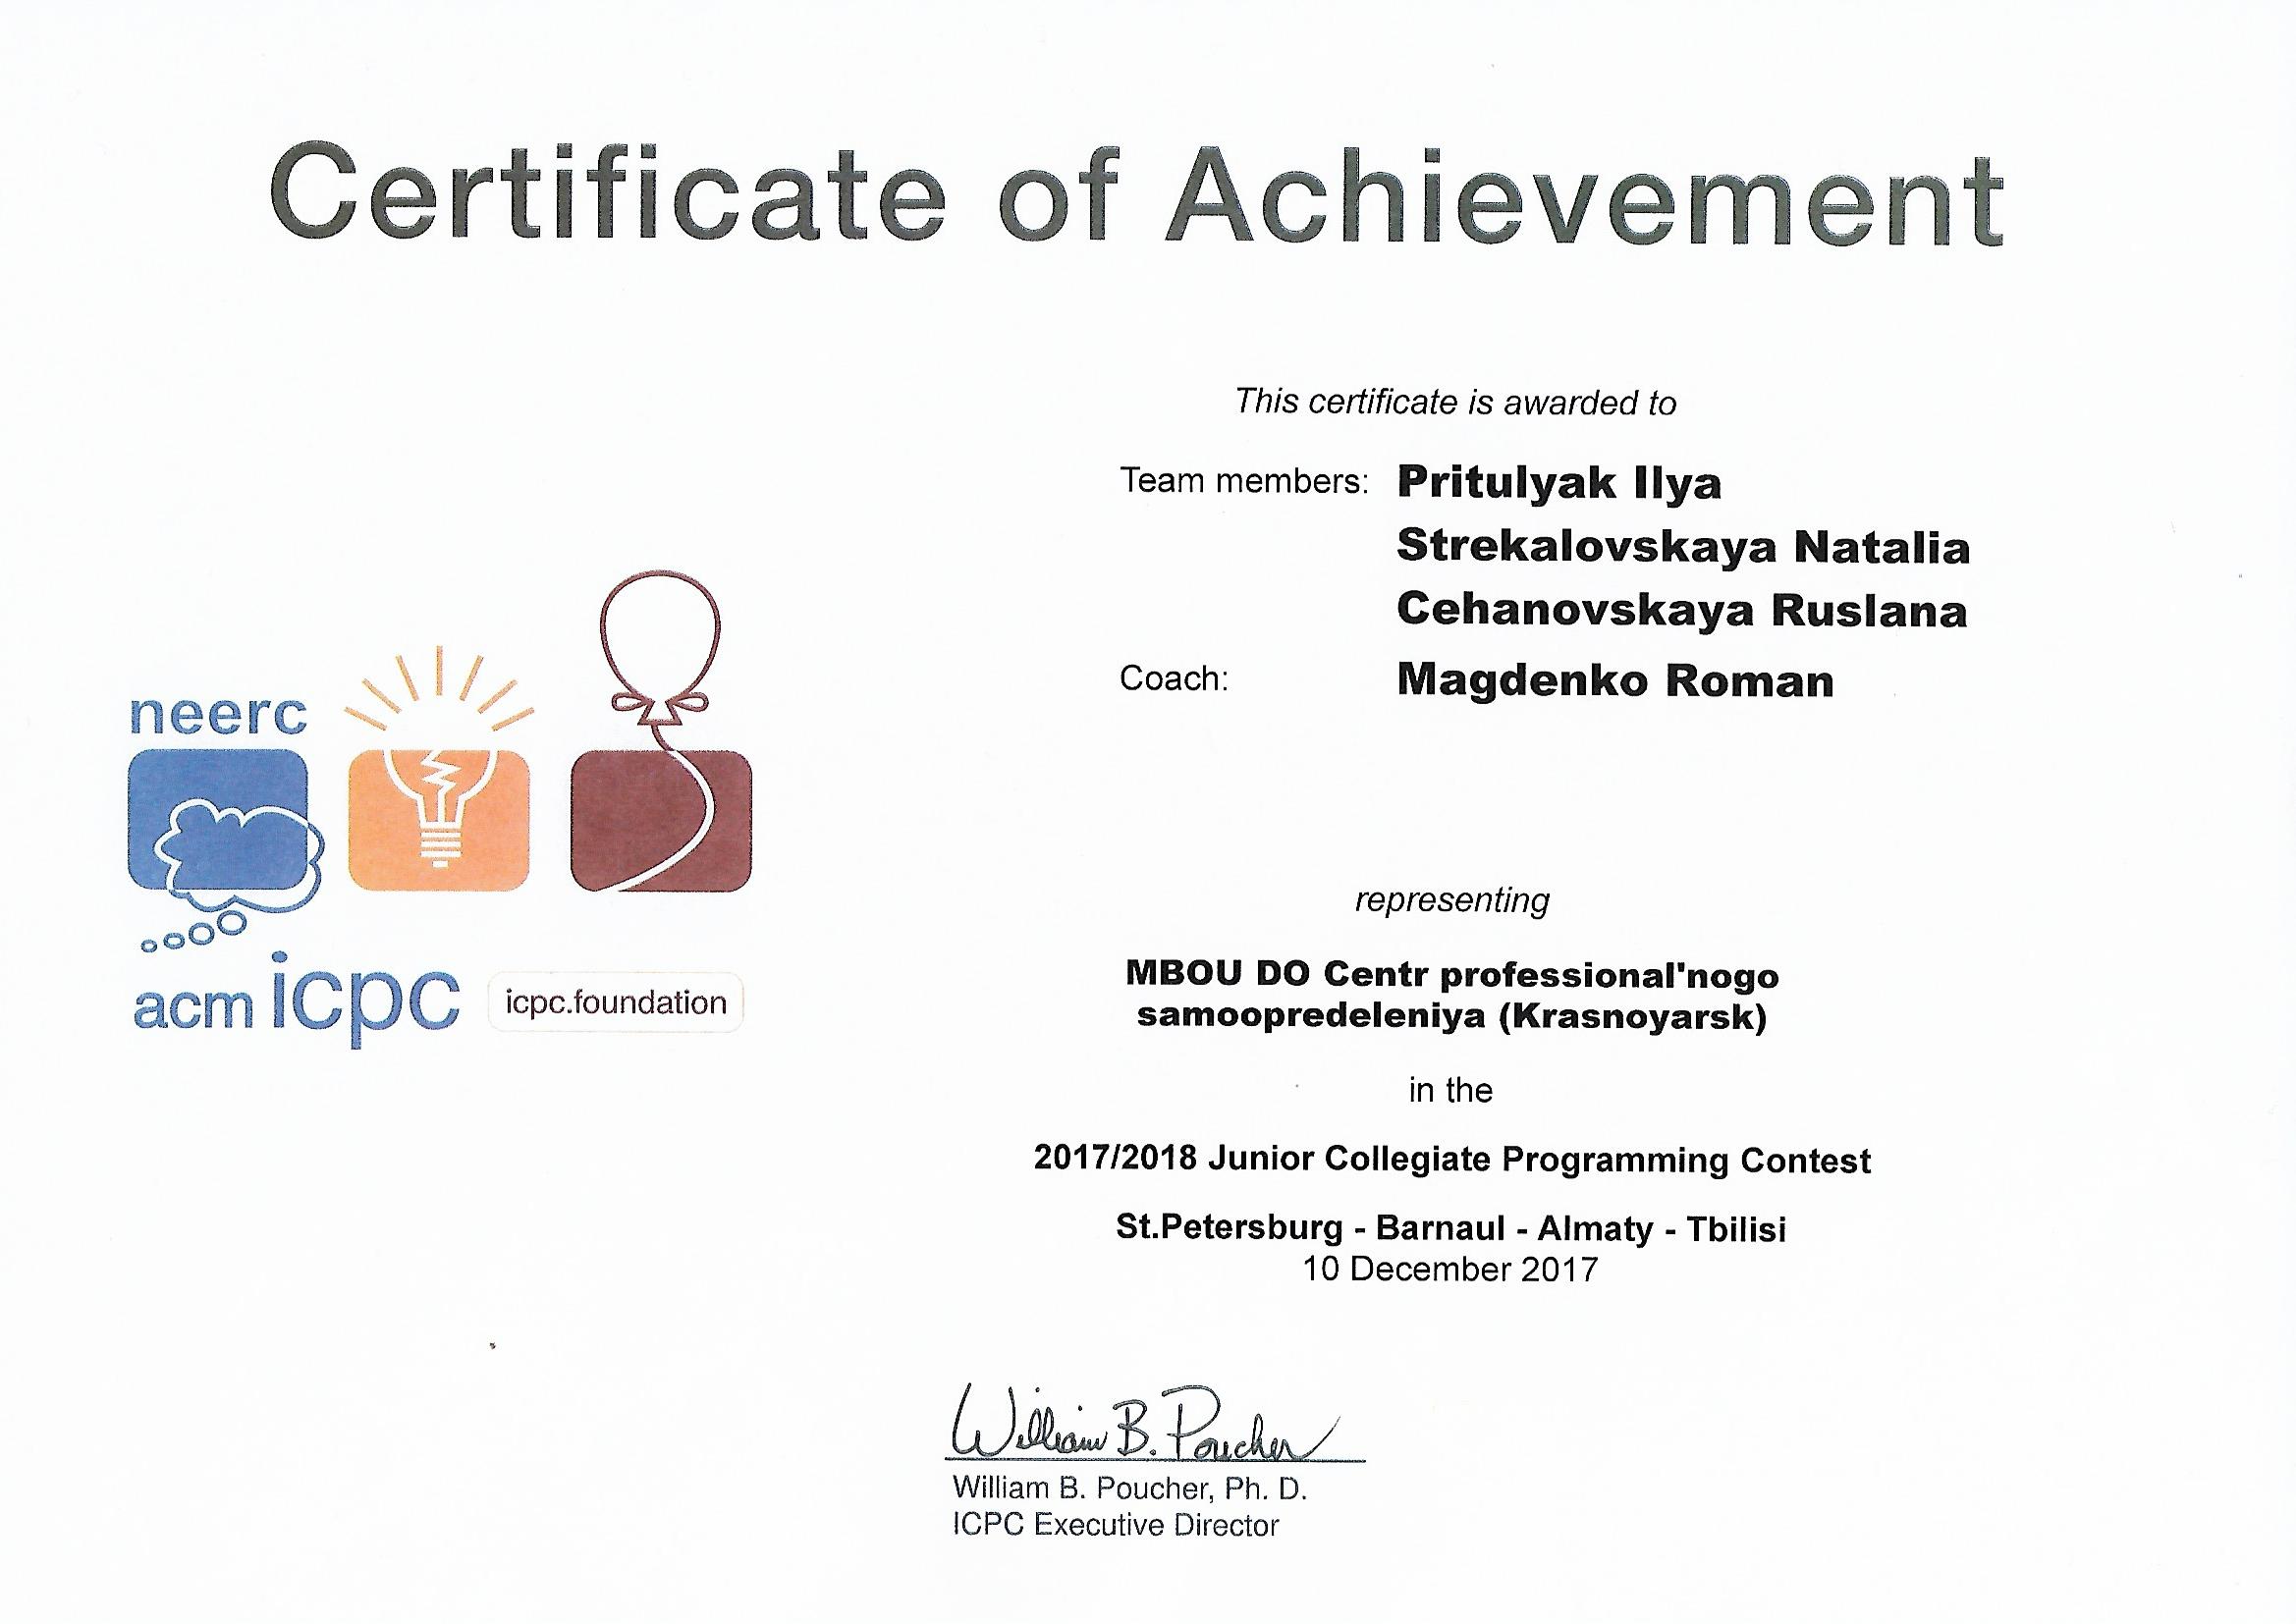 Certificate of Achievement.jpg